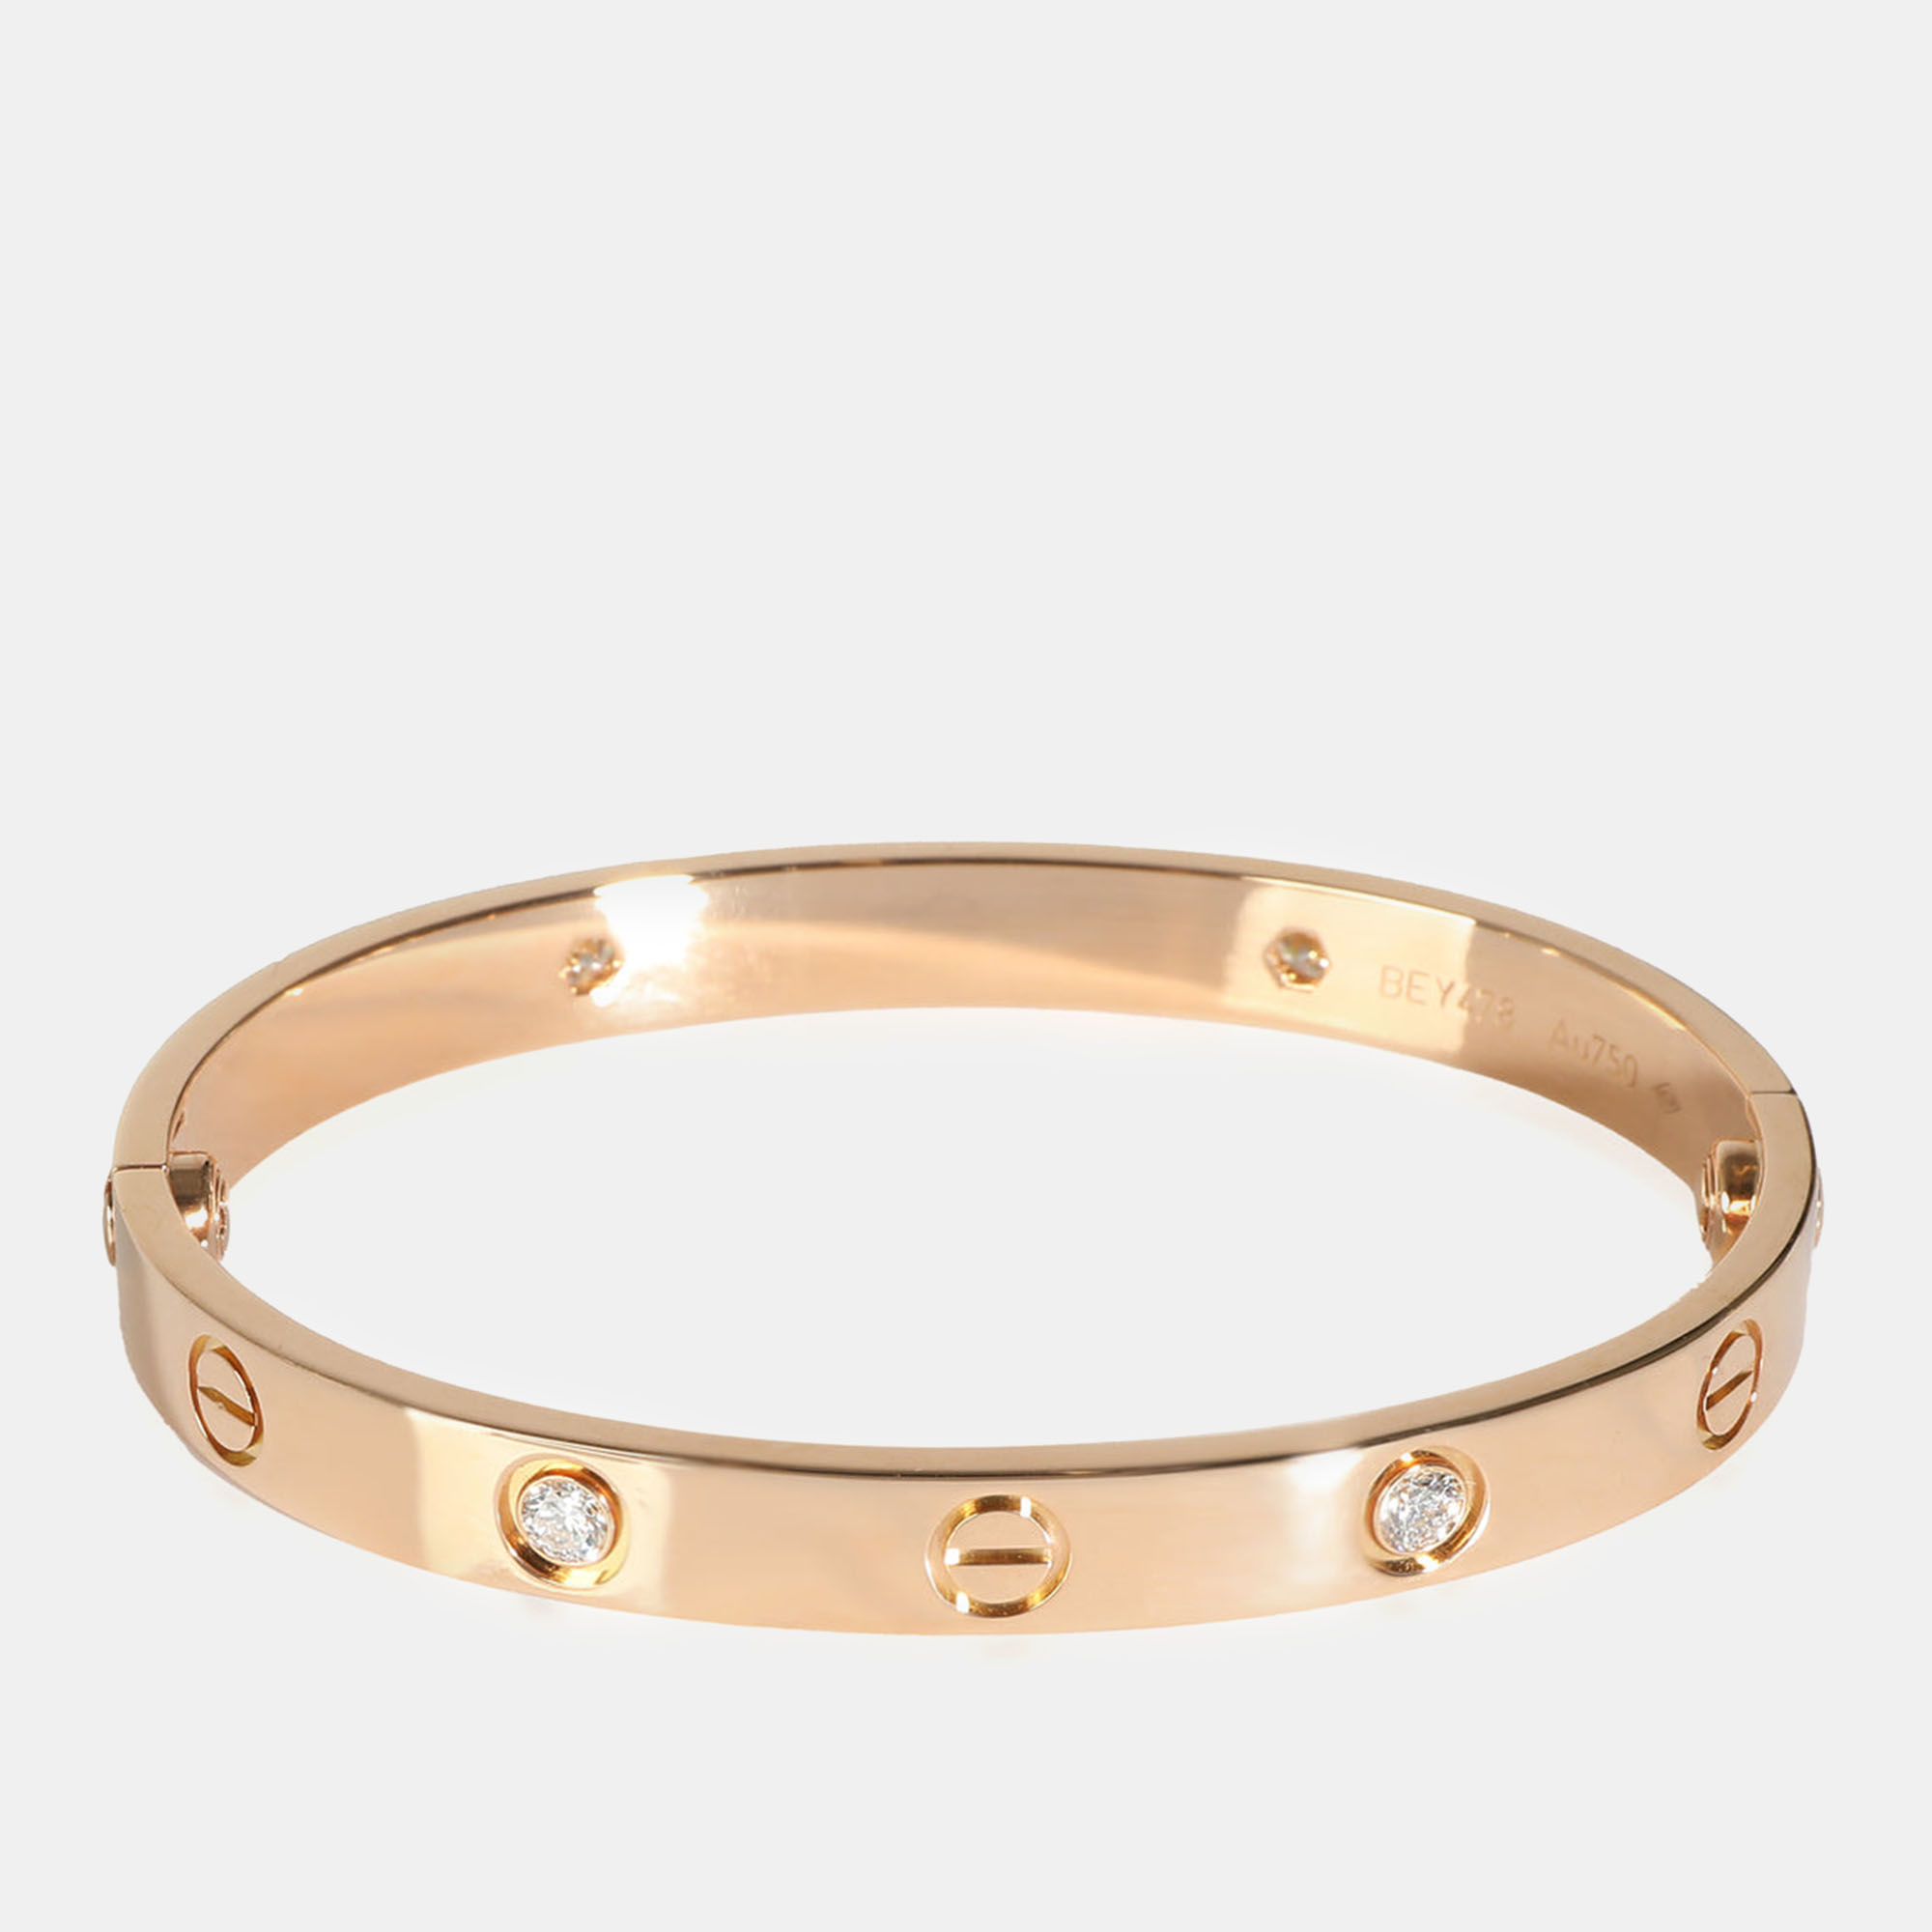 Cartier love bracelet in 18k rose gold 0.42 ctw